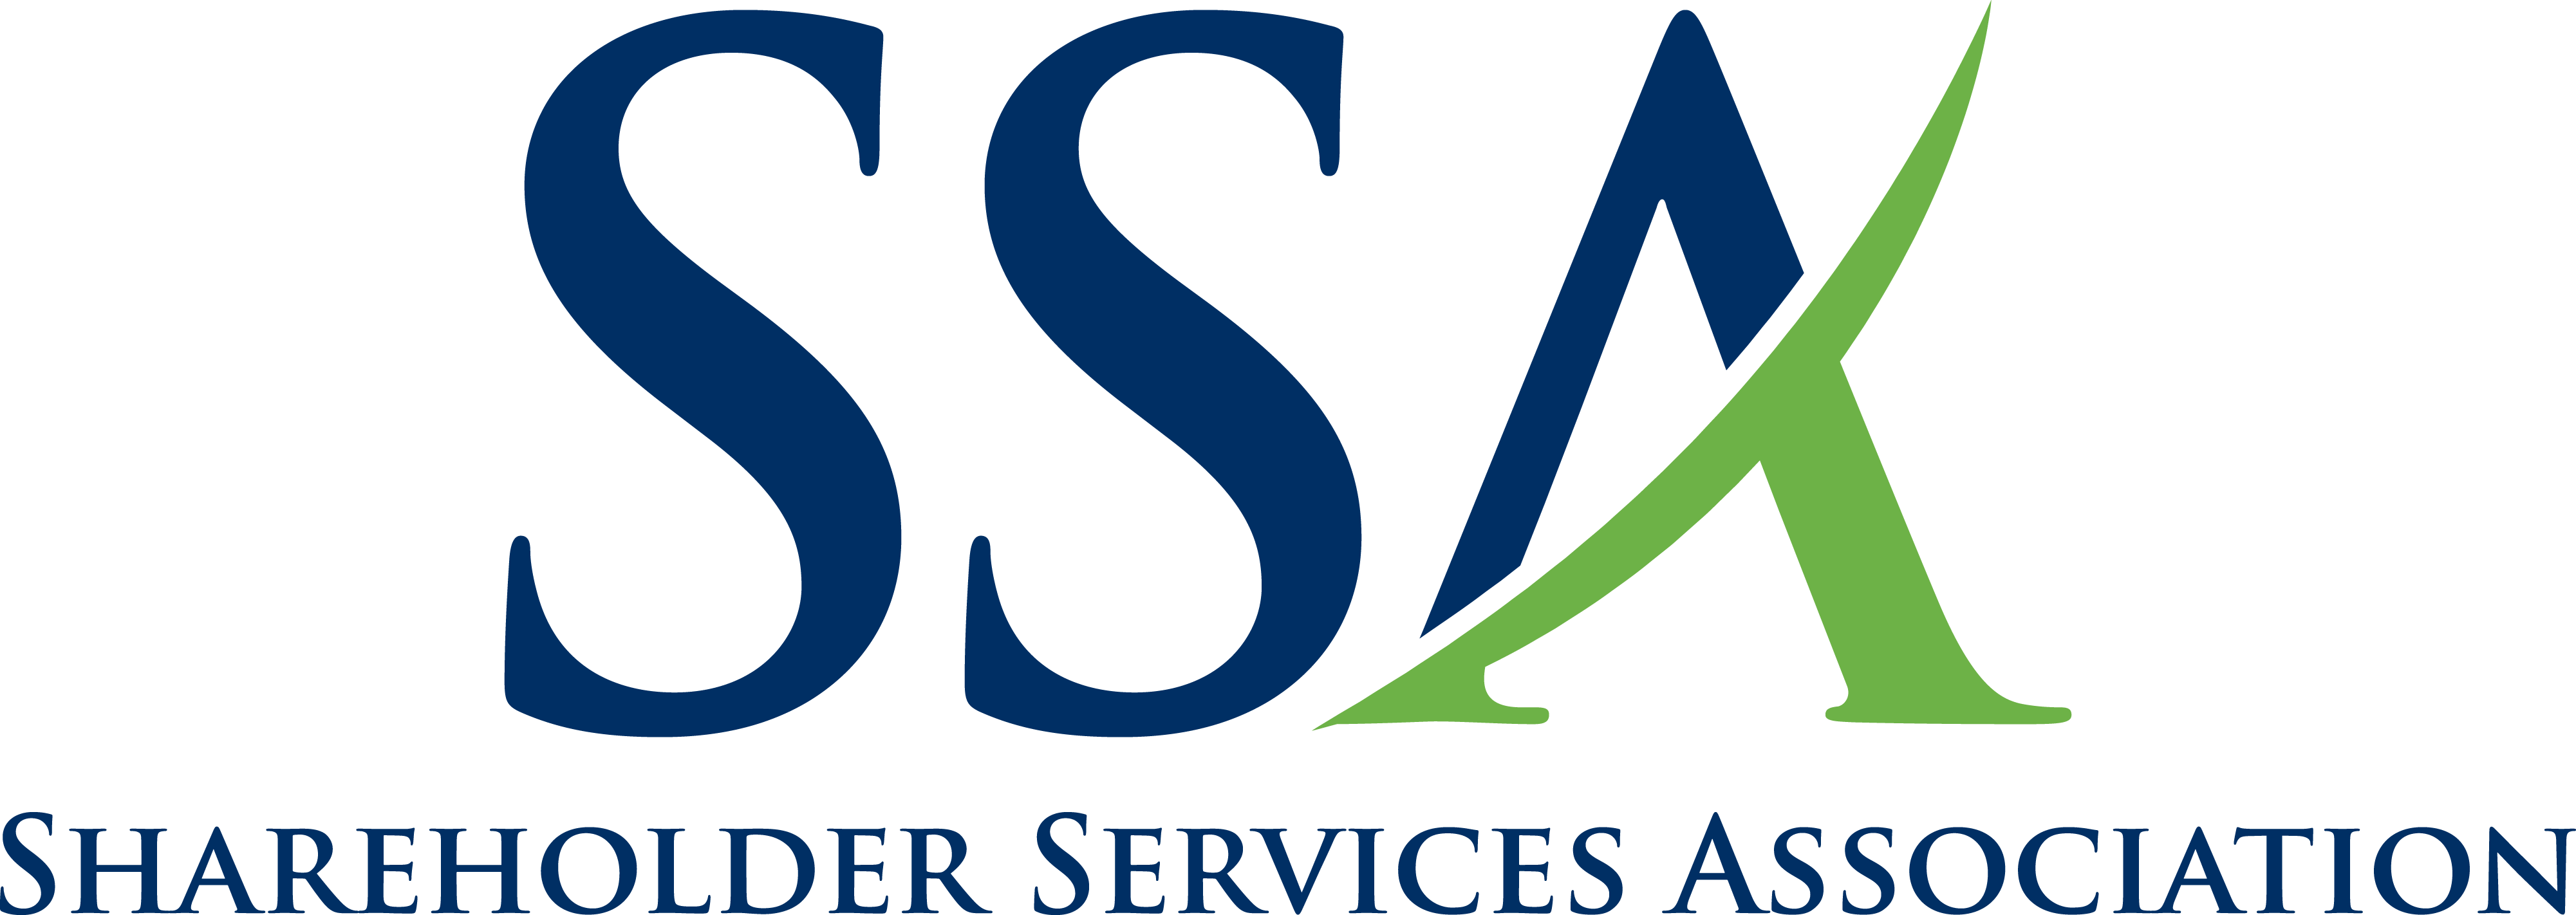 SSA Logo - Shareholder Services Association